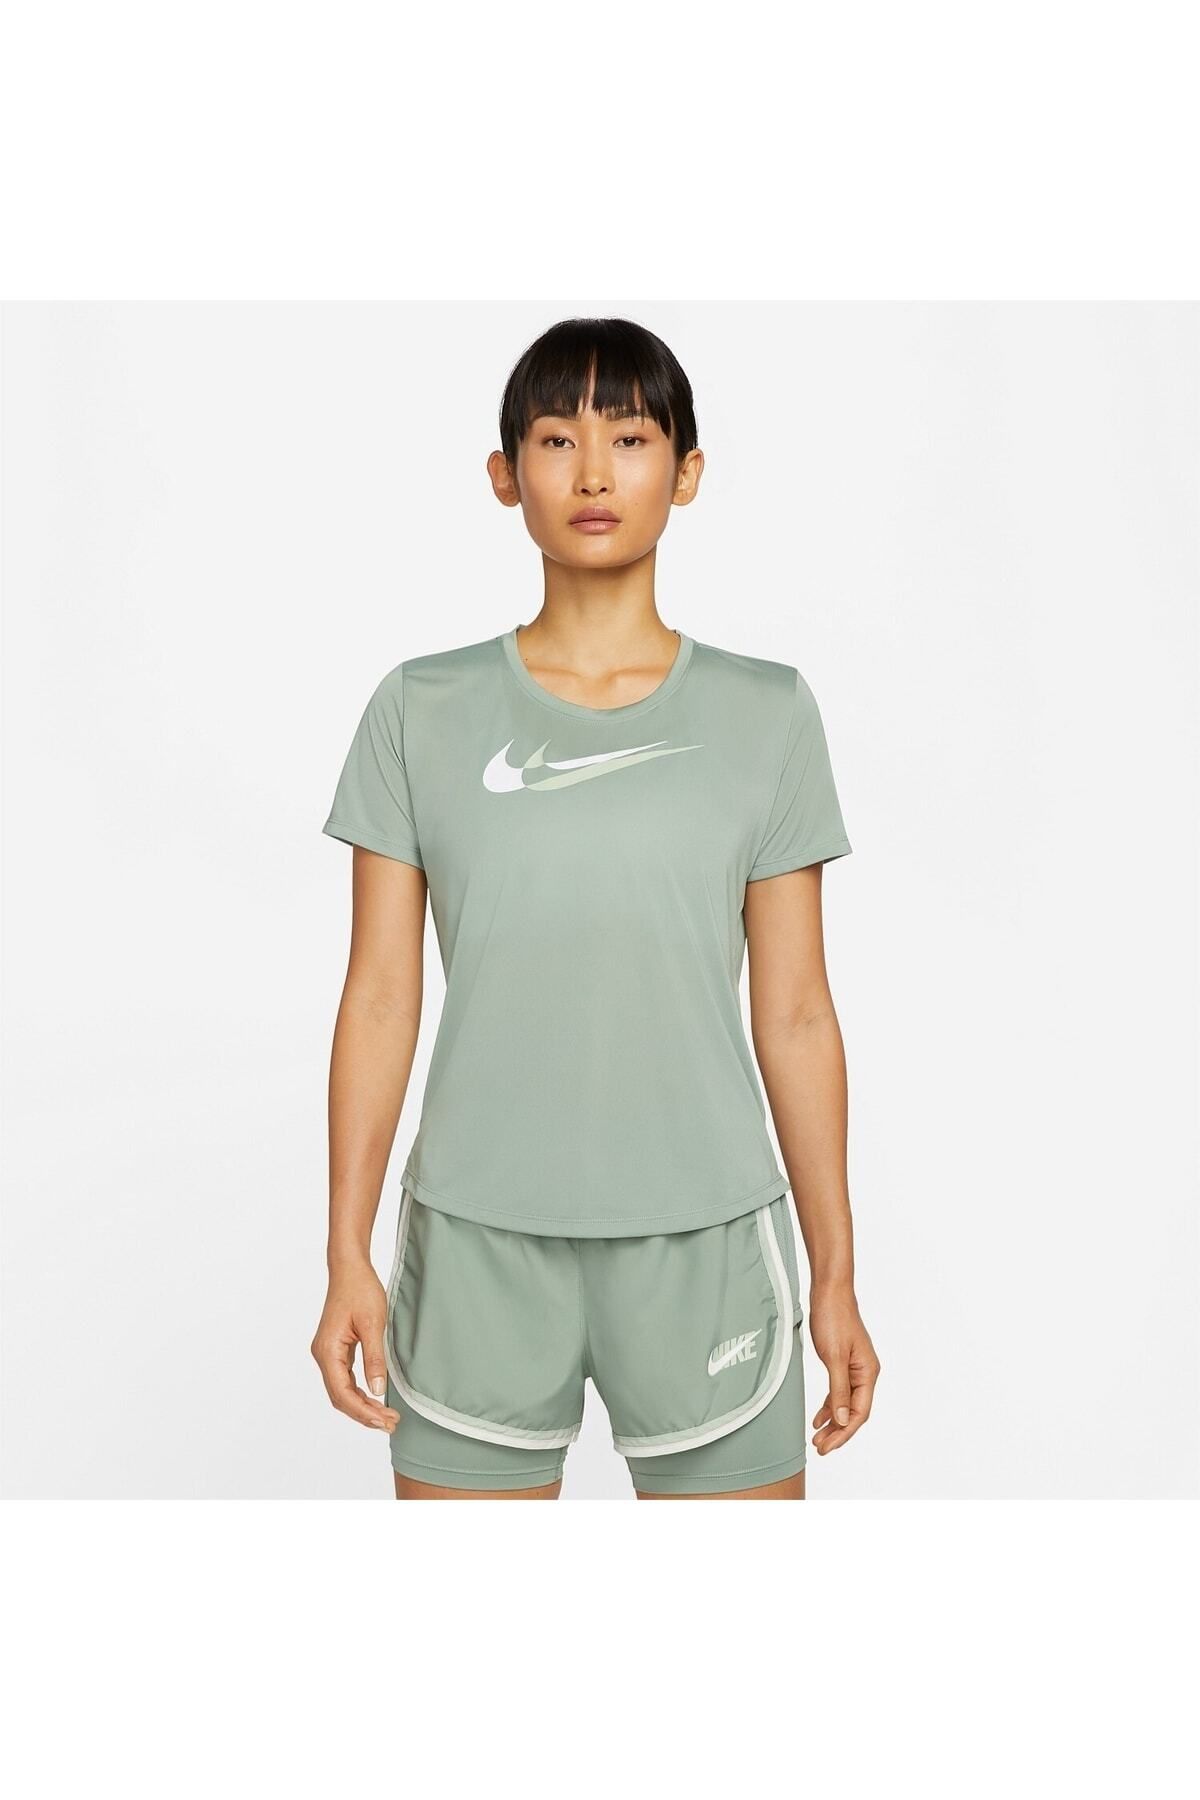 Nike Dri-fit Swoosh Running Short-Sleeve Kadın Tişört Dd6478-357